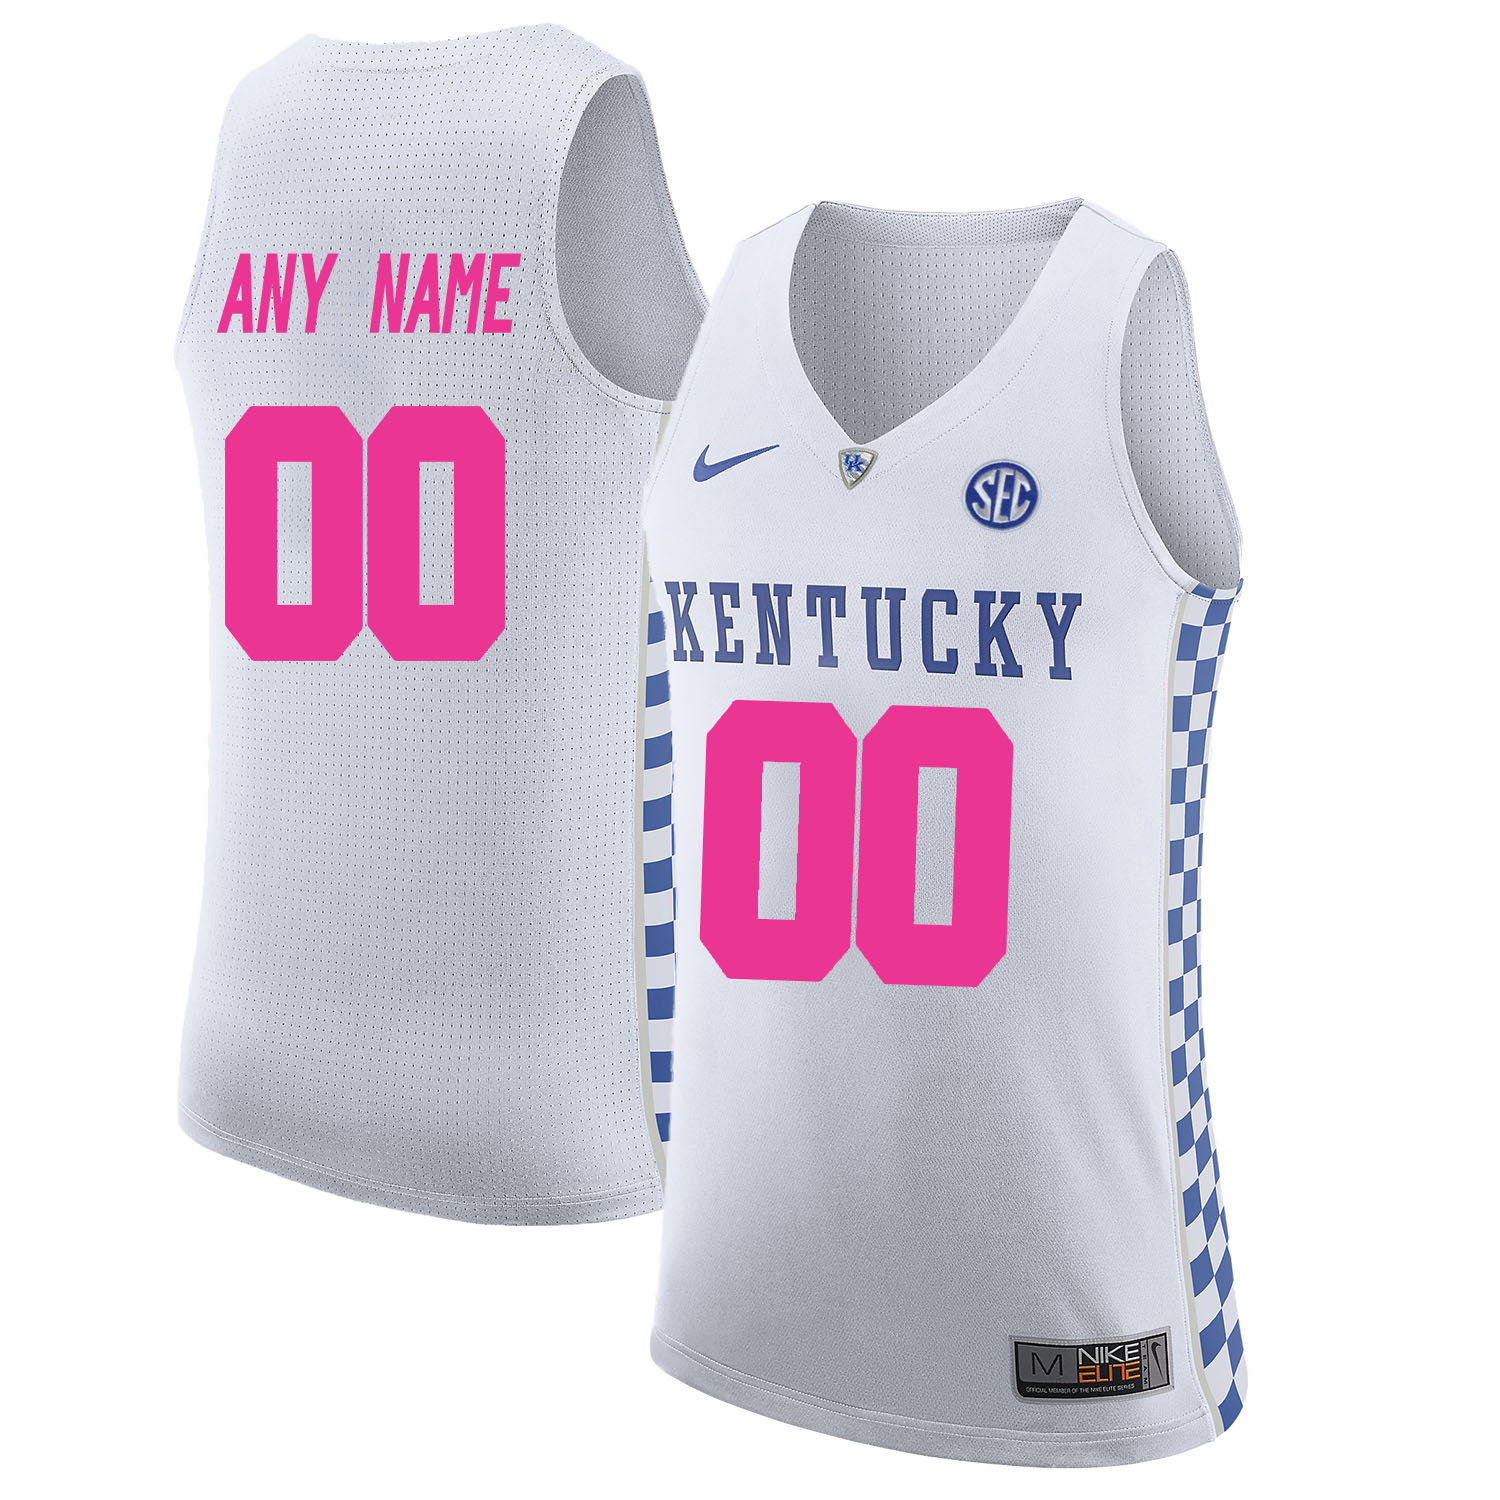 Kentucky Wildcats White 2018 Breast Cancer Awareness Men's Customized College Basketball Jersey